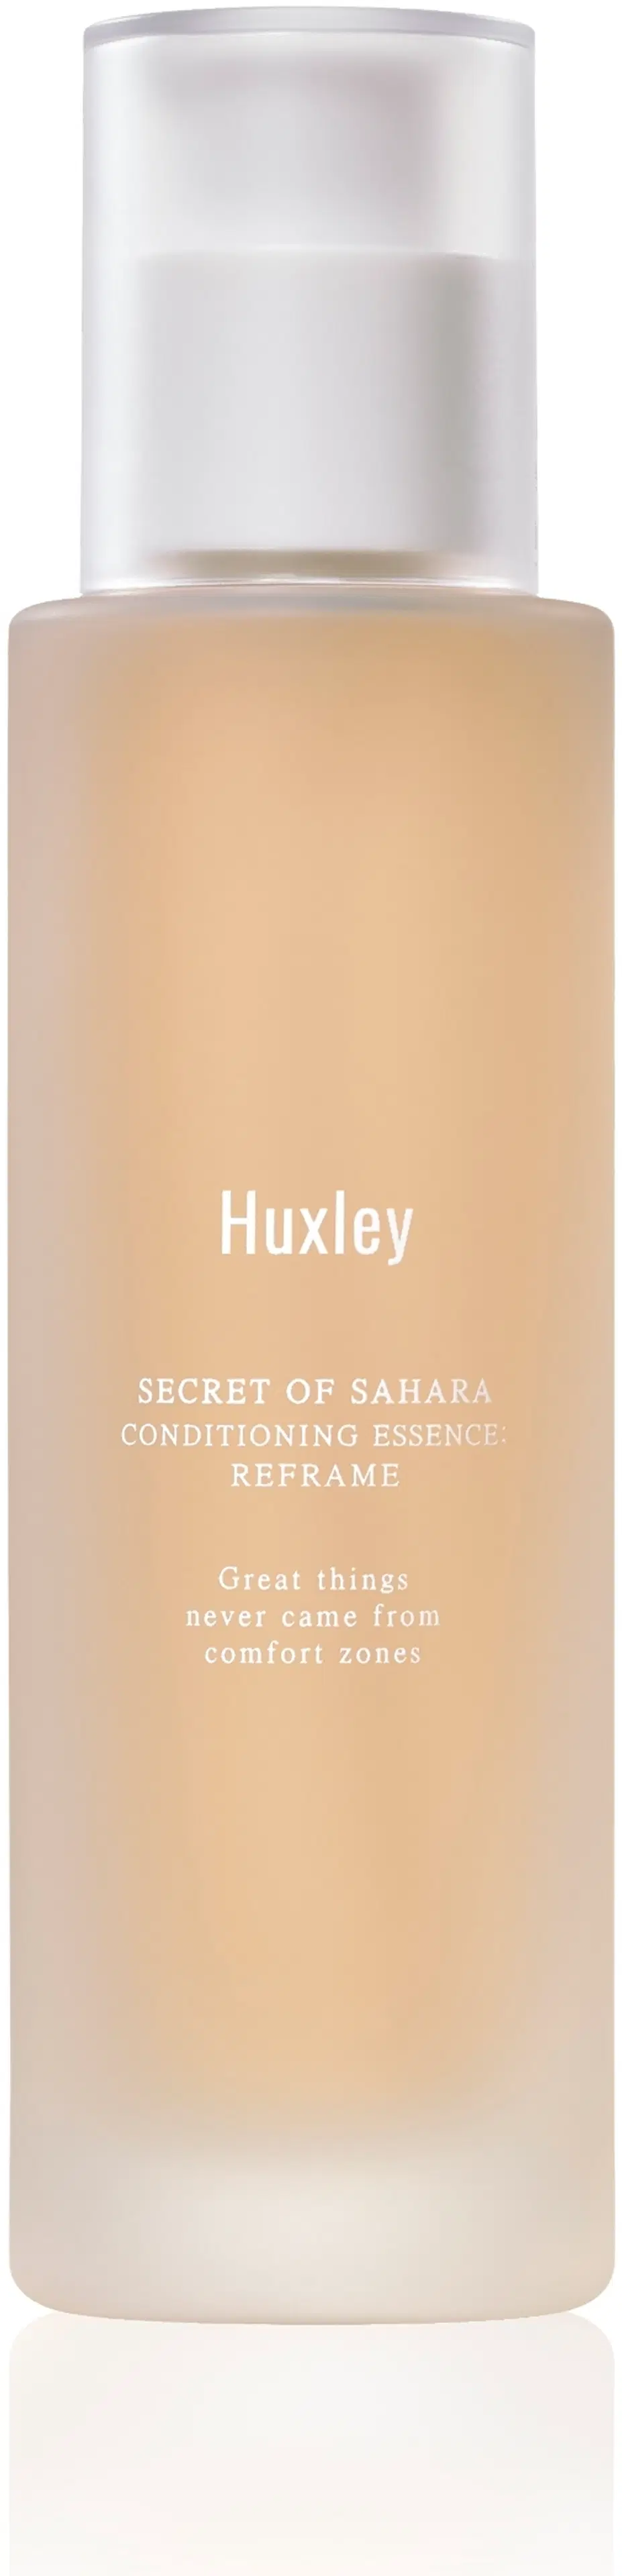 Huxley Conditioning Essence; Reframe hoitoneste 60ml